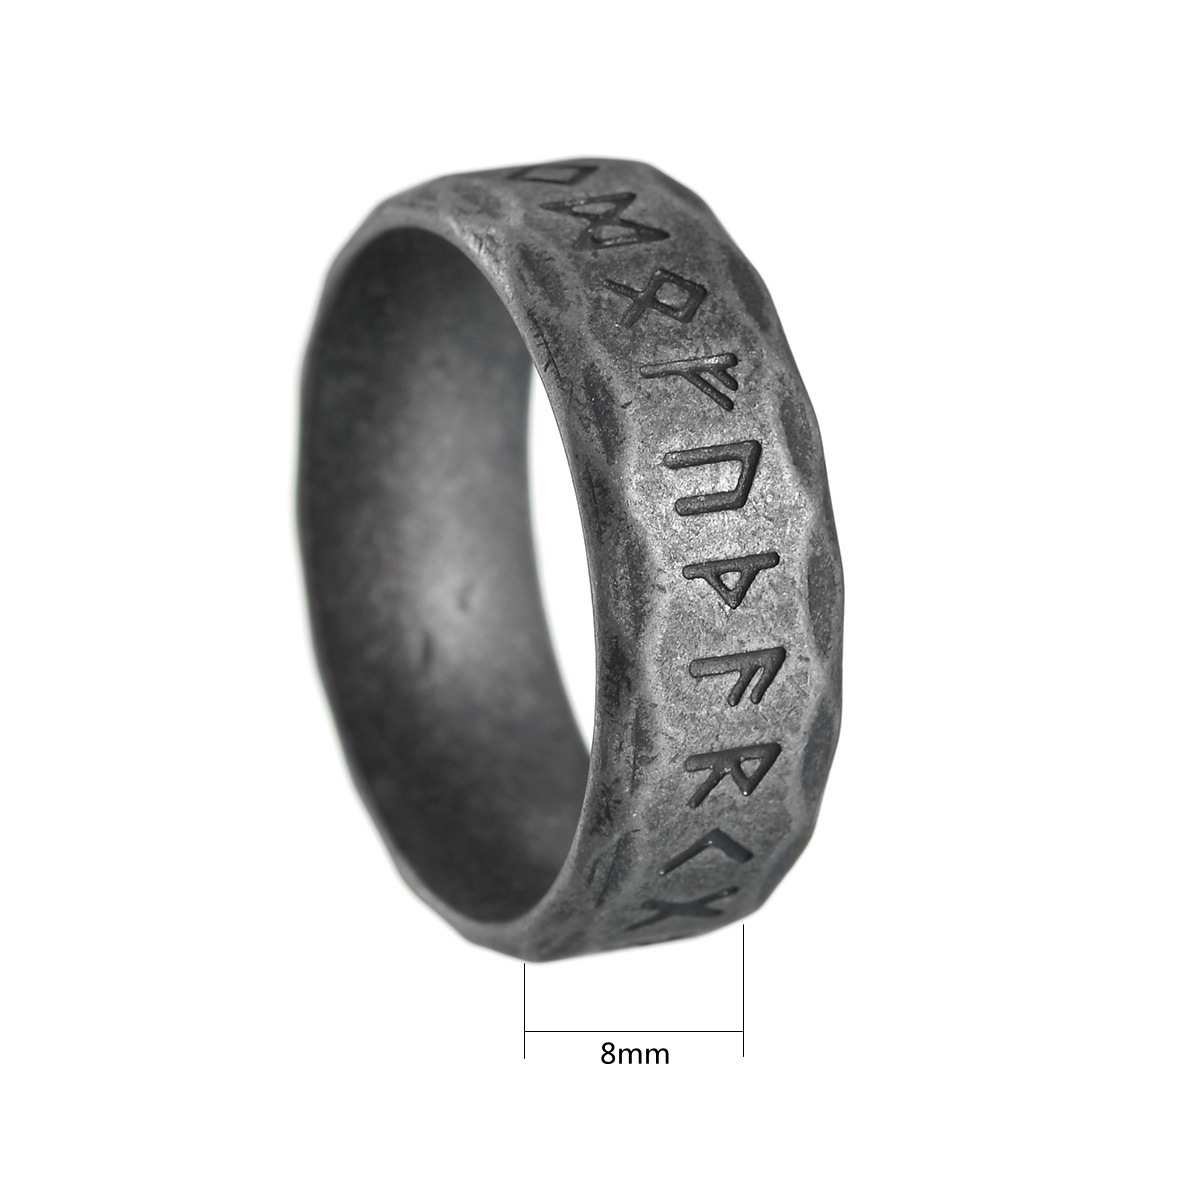 4:8mm ancient silver batch rune